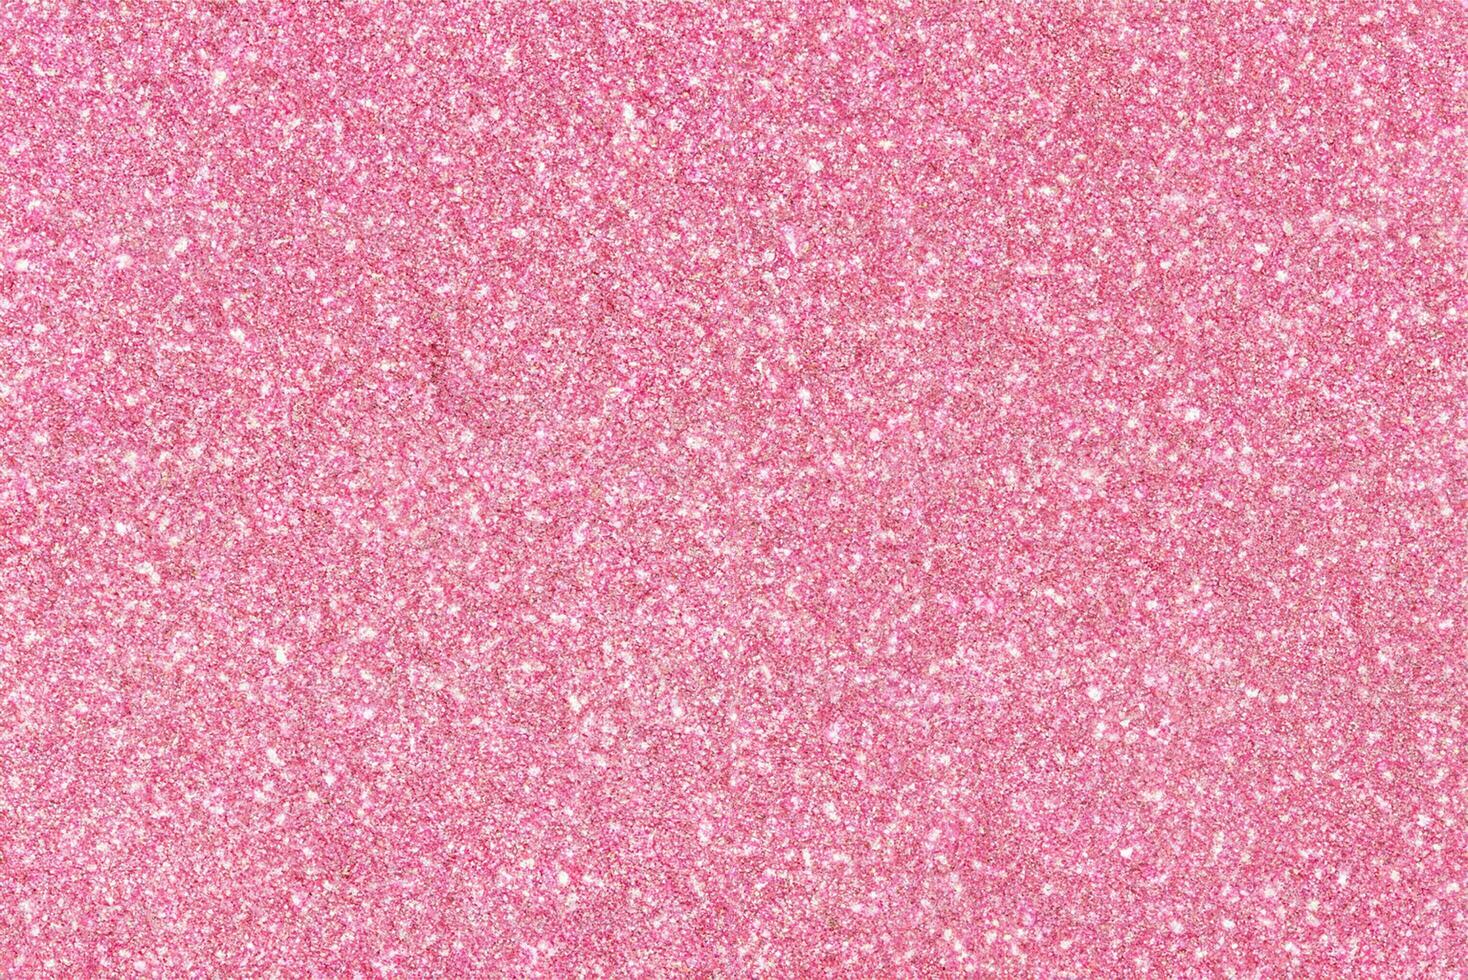 fundo abstrato de textura de glitter rosa foto